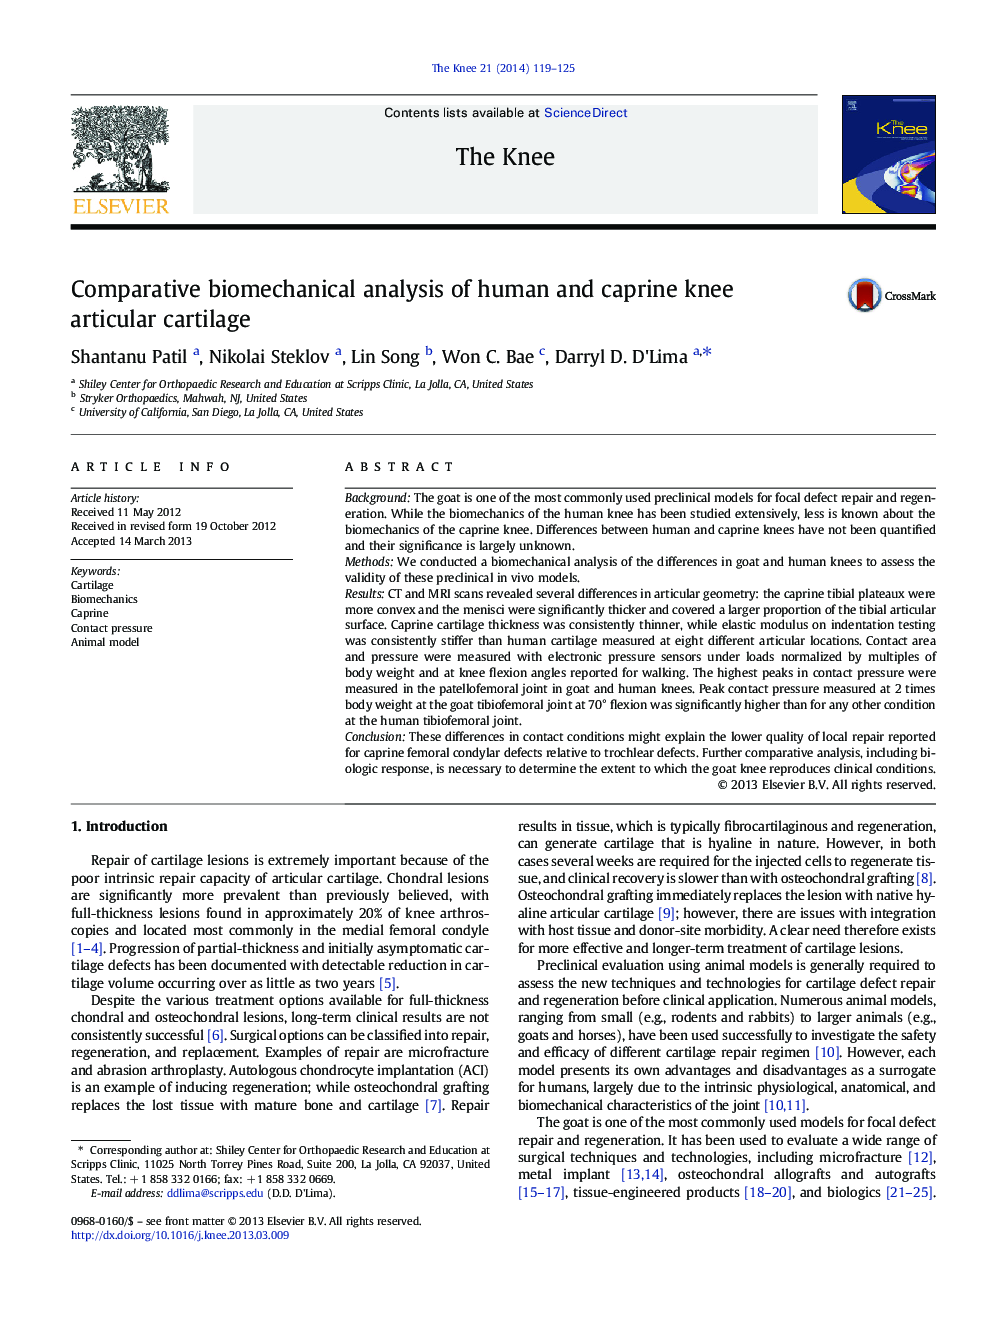 Comparative biomechanical analysis of human and caprine knee articular cartilage